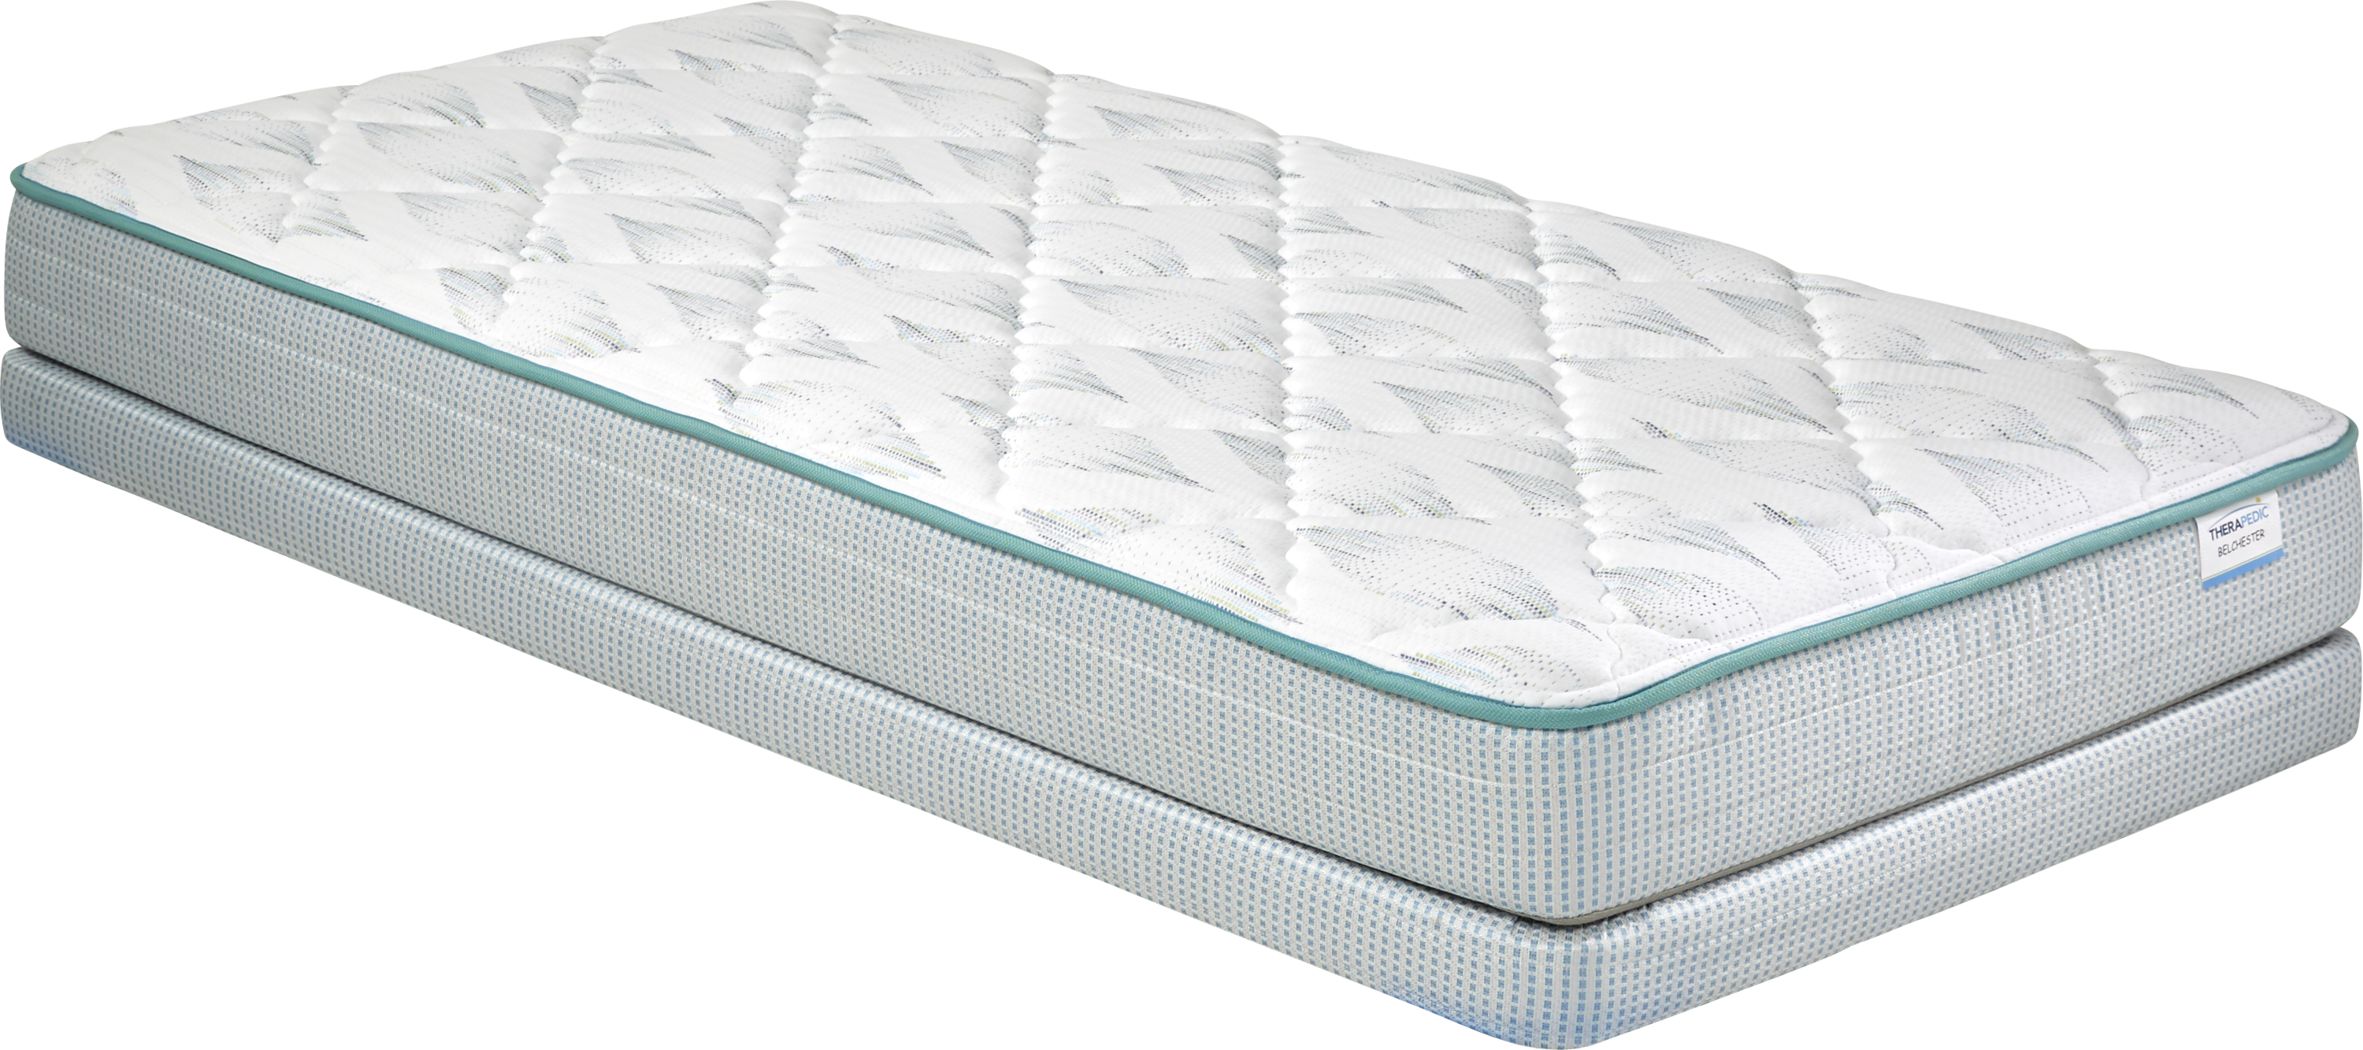 low profile twin mattress pad